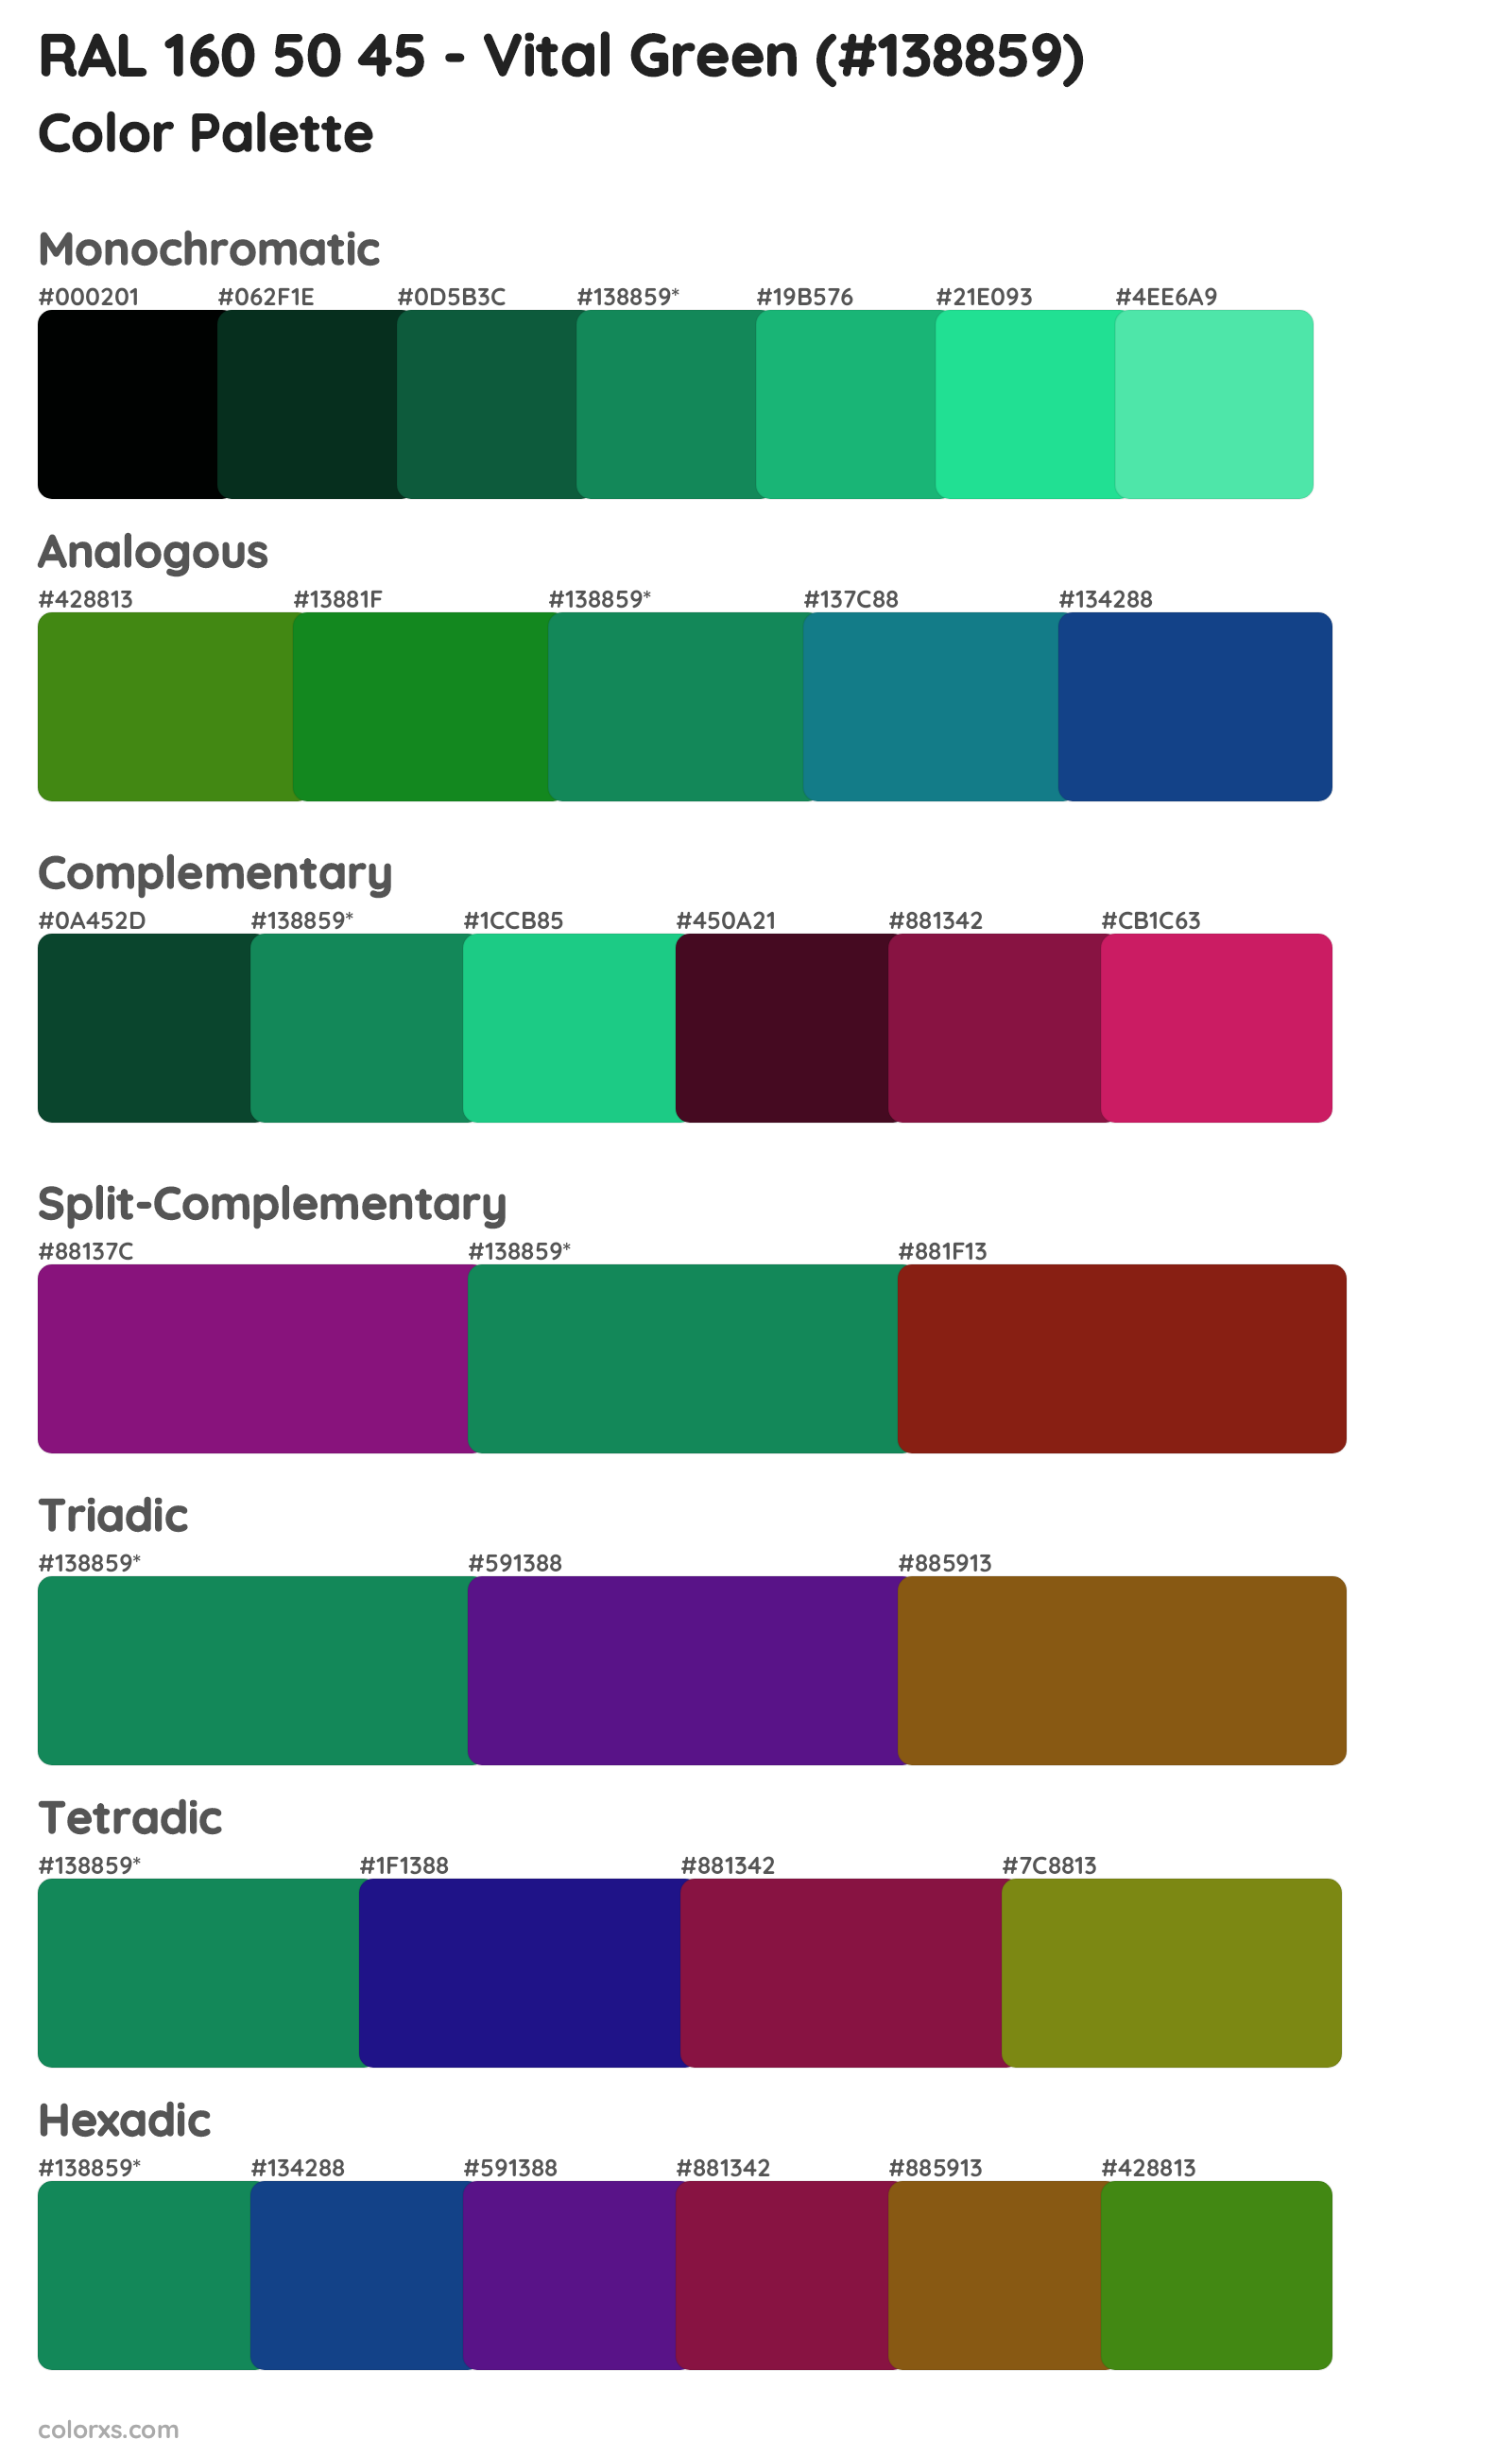 RAL 160 50 45 - Vital Green Color Scheme Palettes